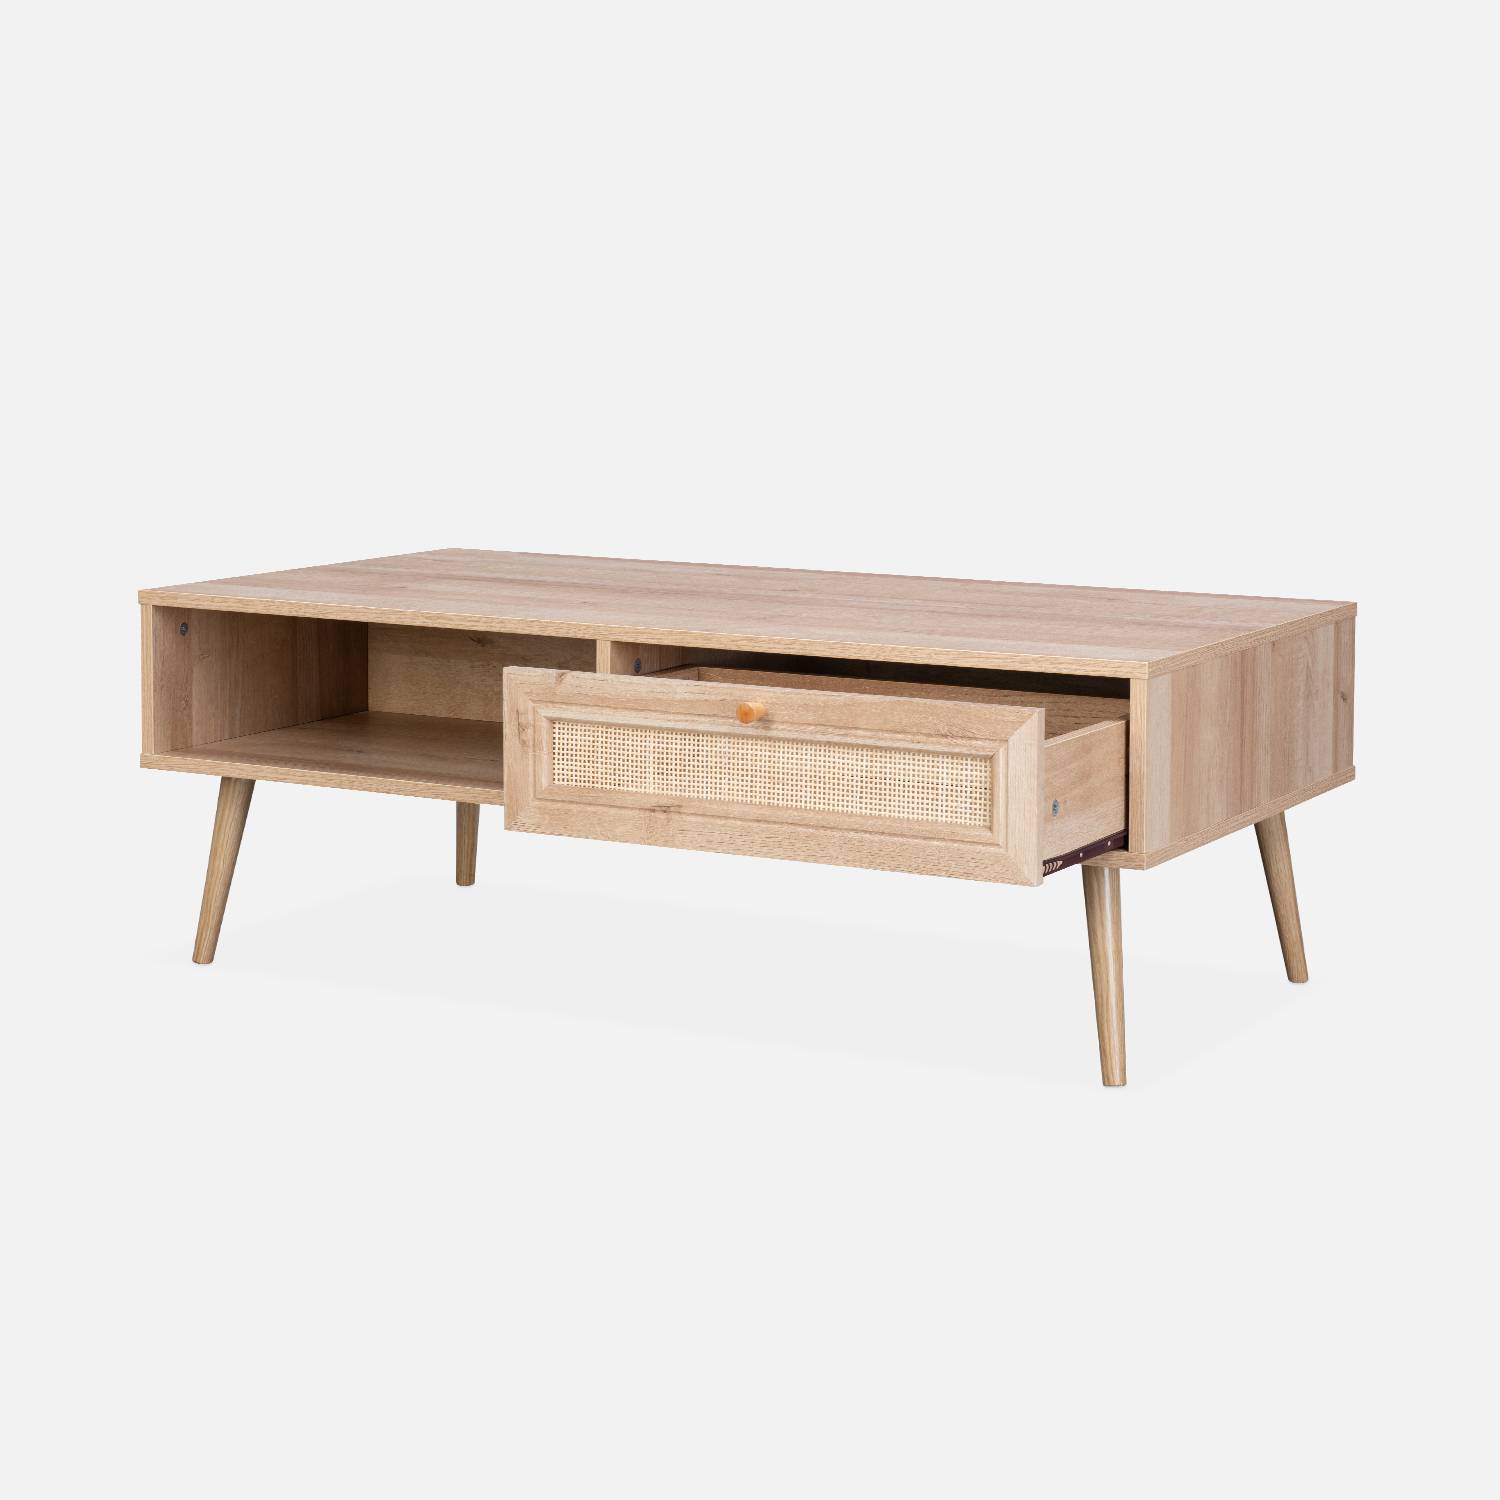 Wood and woven rattan coffee table with storage, 110x59x39cm, Natural, Boheme,sweeek,Photo5